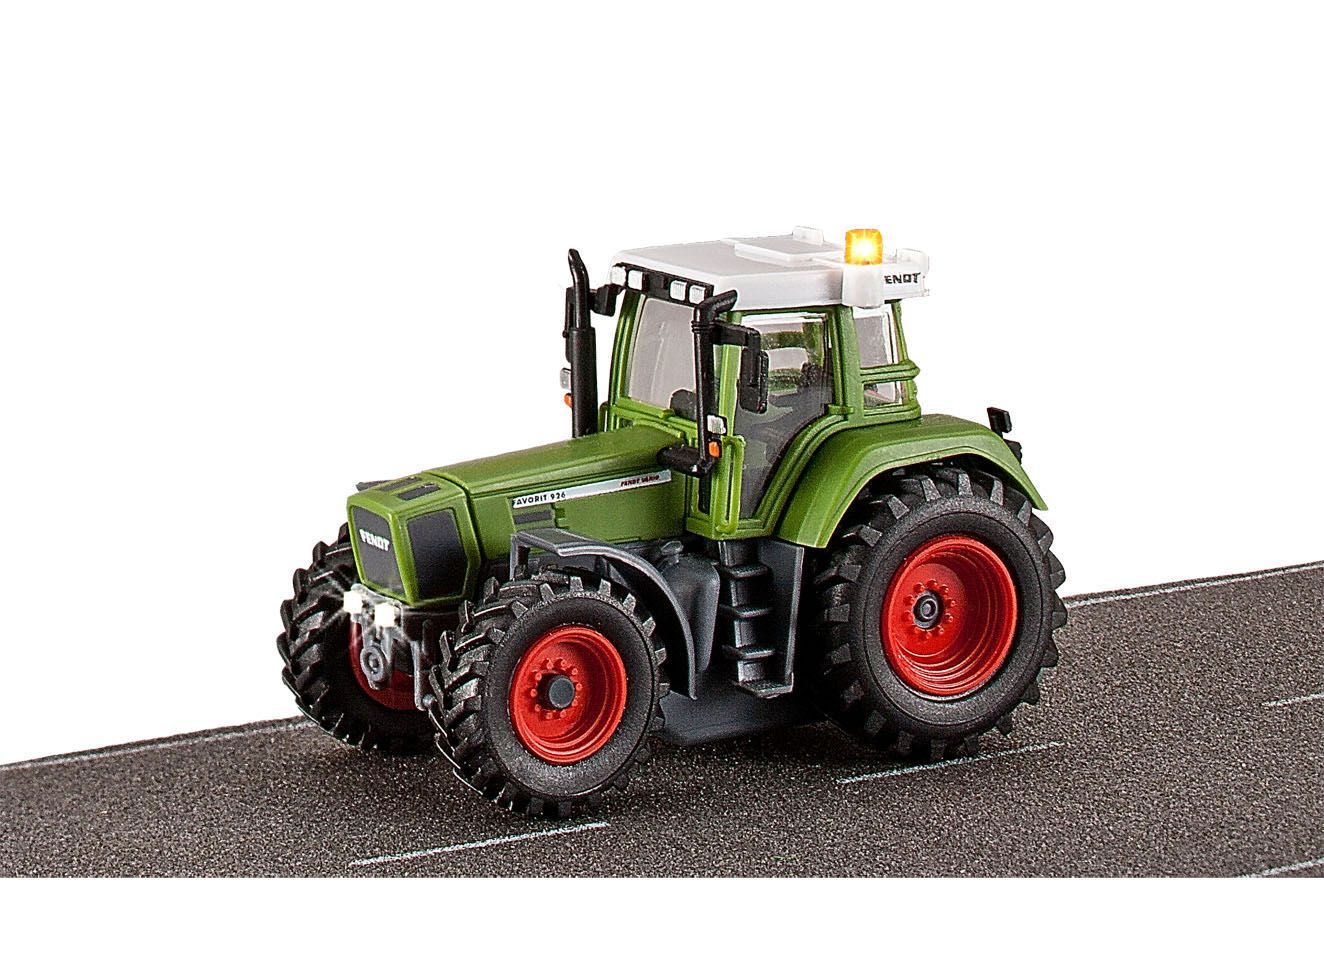 Viessmann 1166 - Traktor Fendt Funktionsmodell H0 1:87